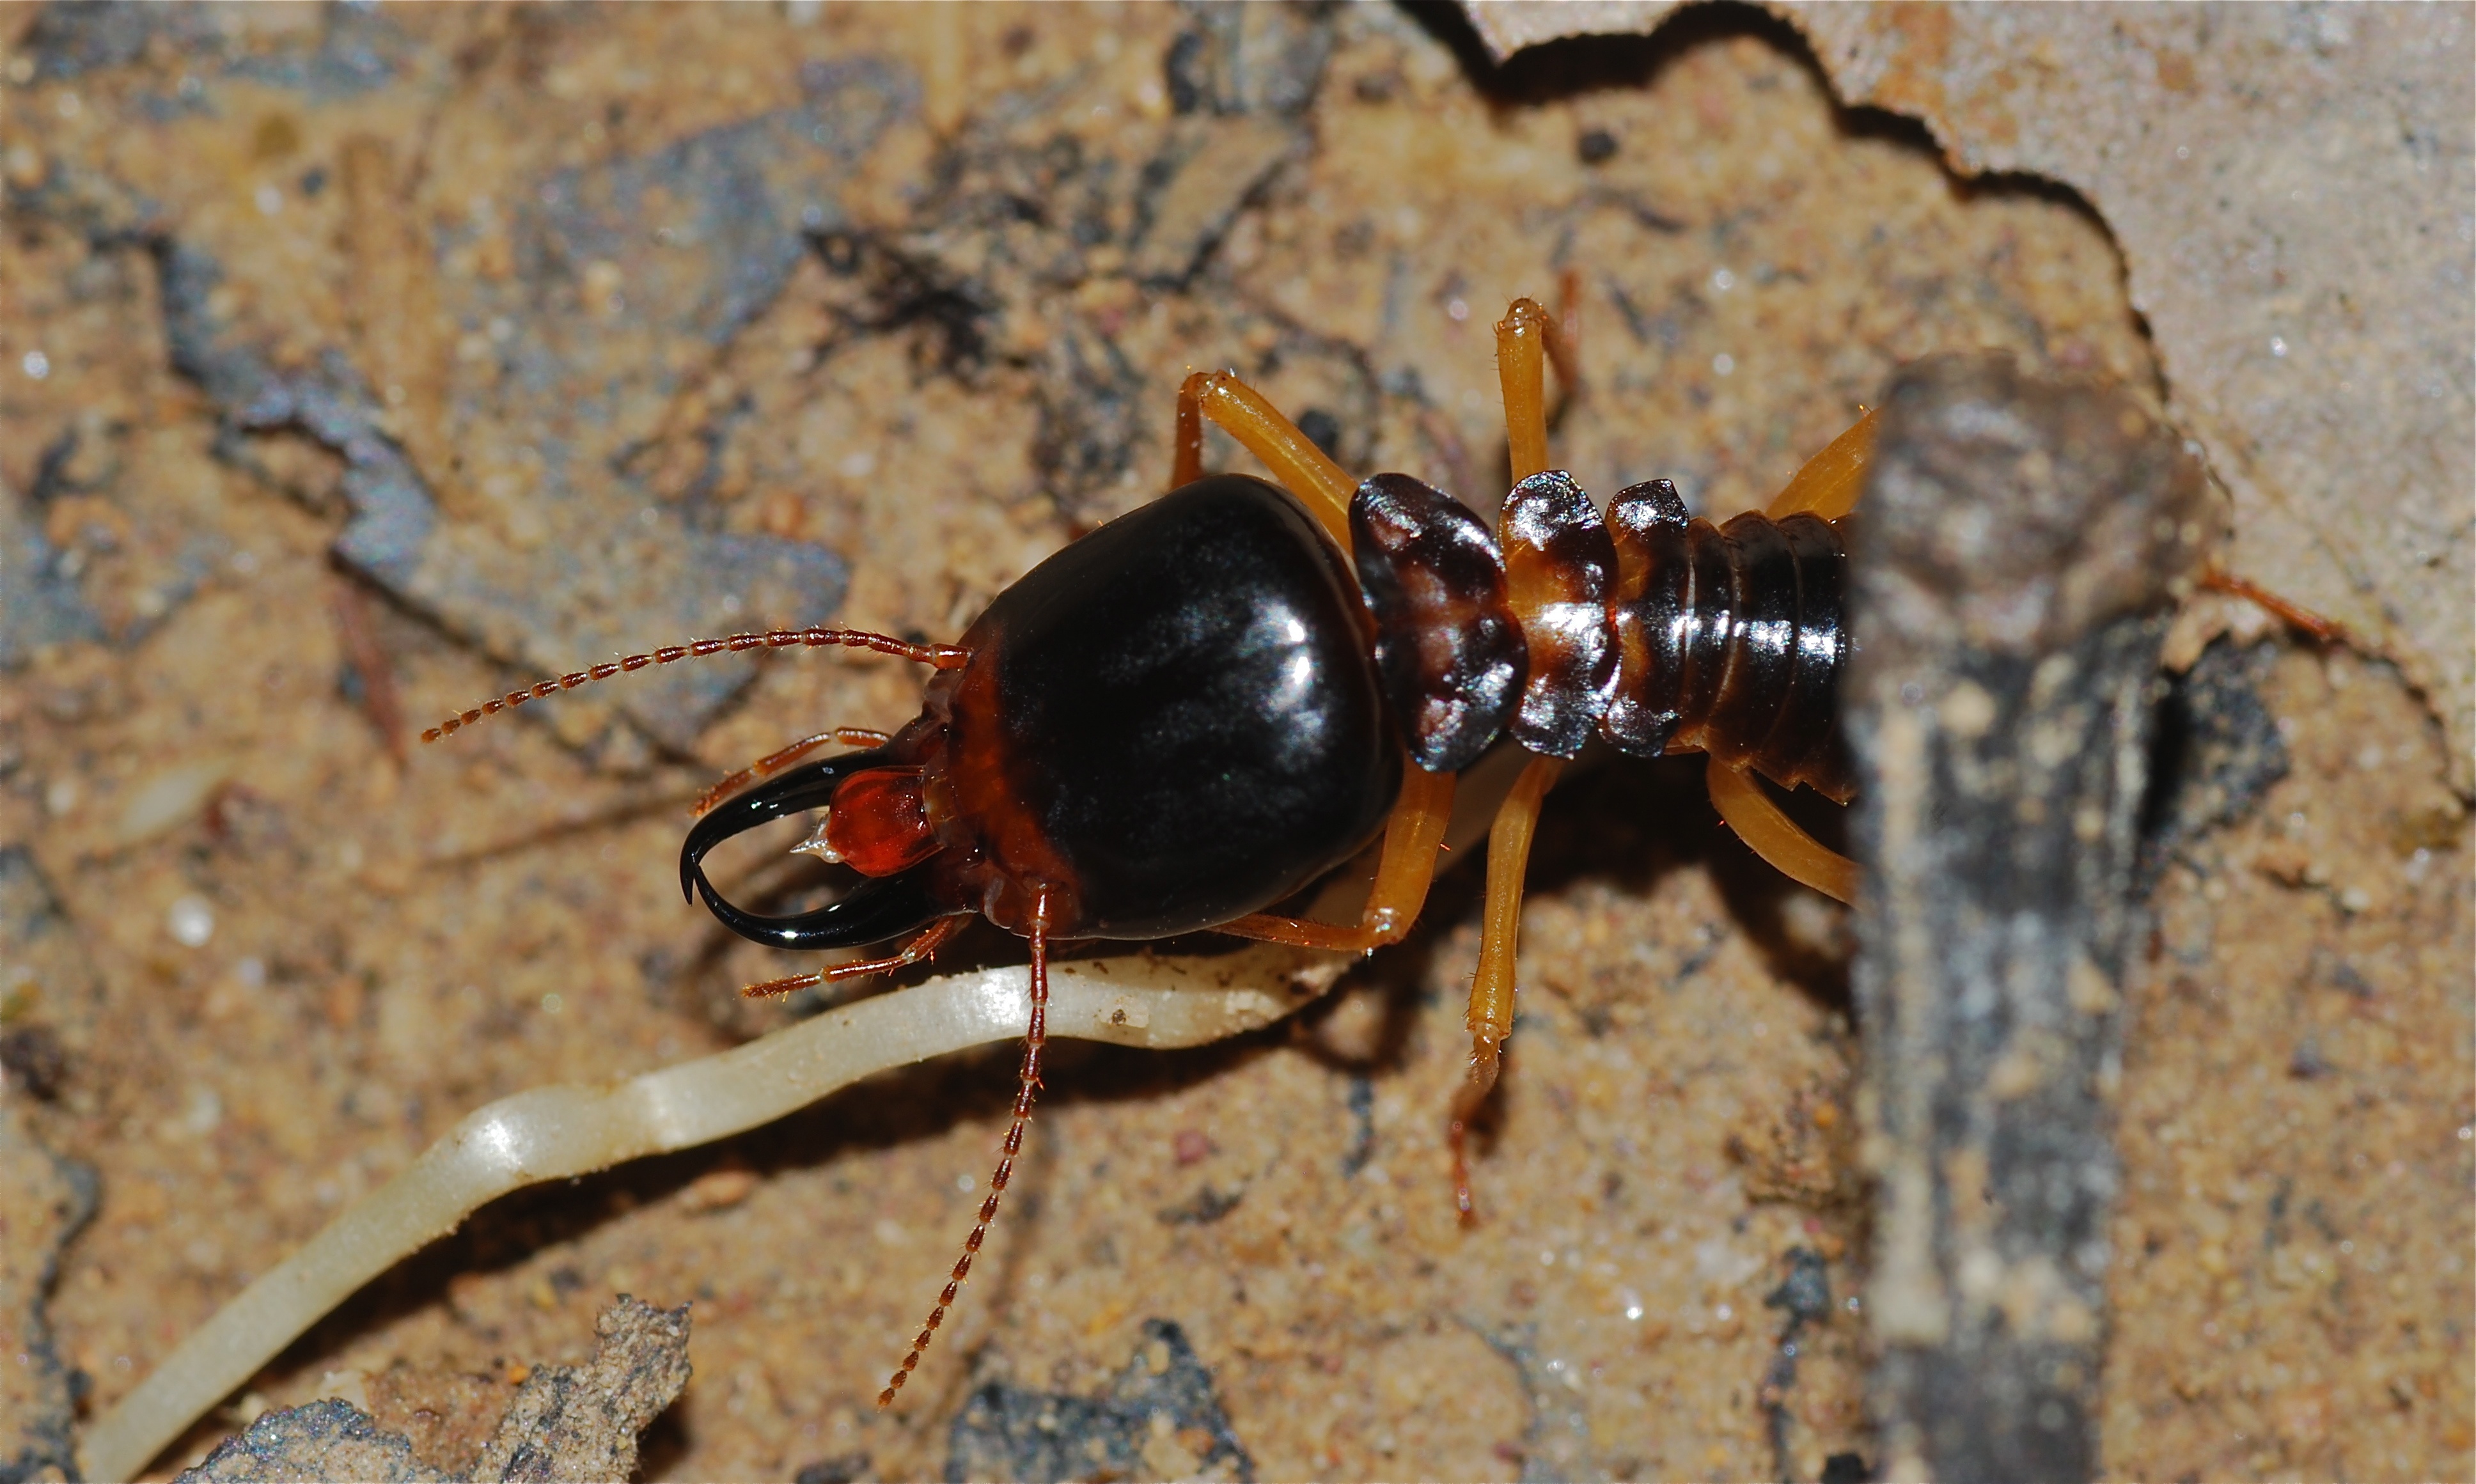 Pest Control OKC: Fall Termites?